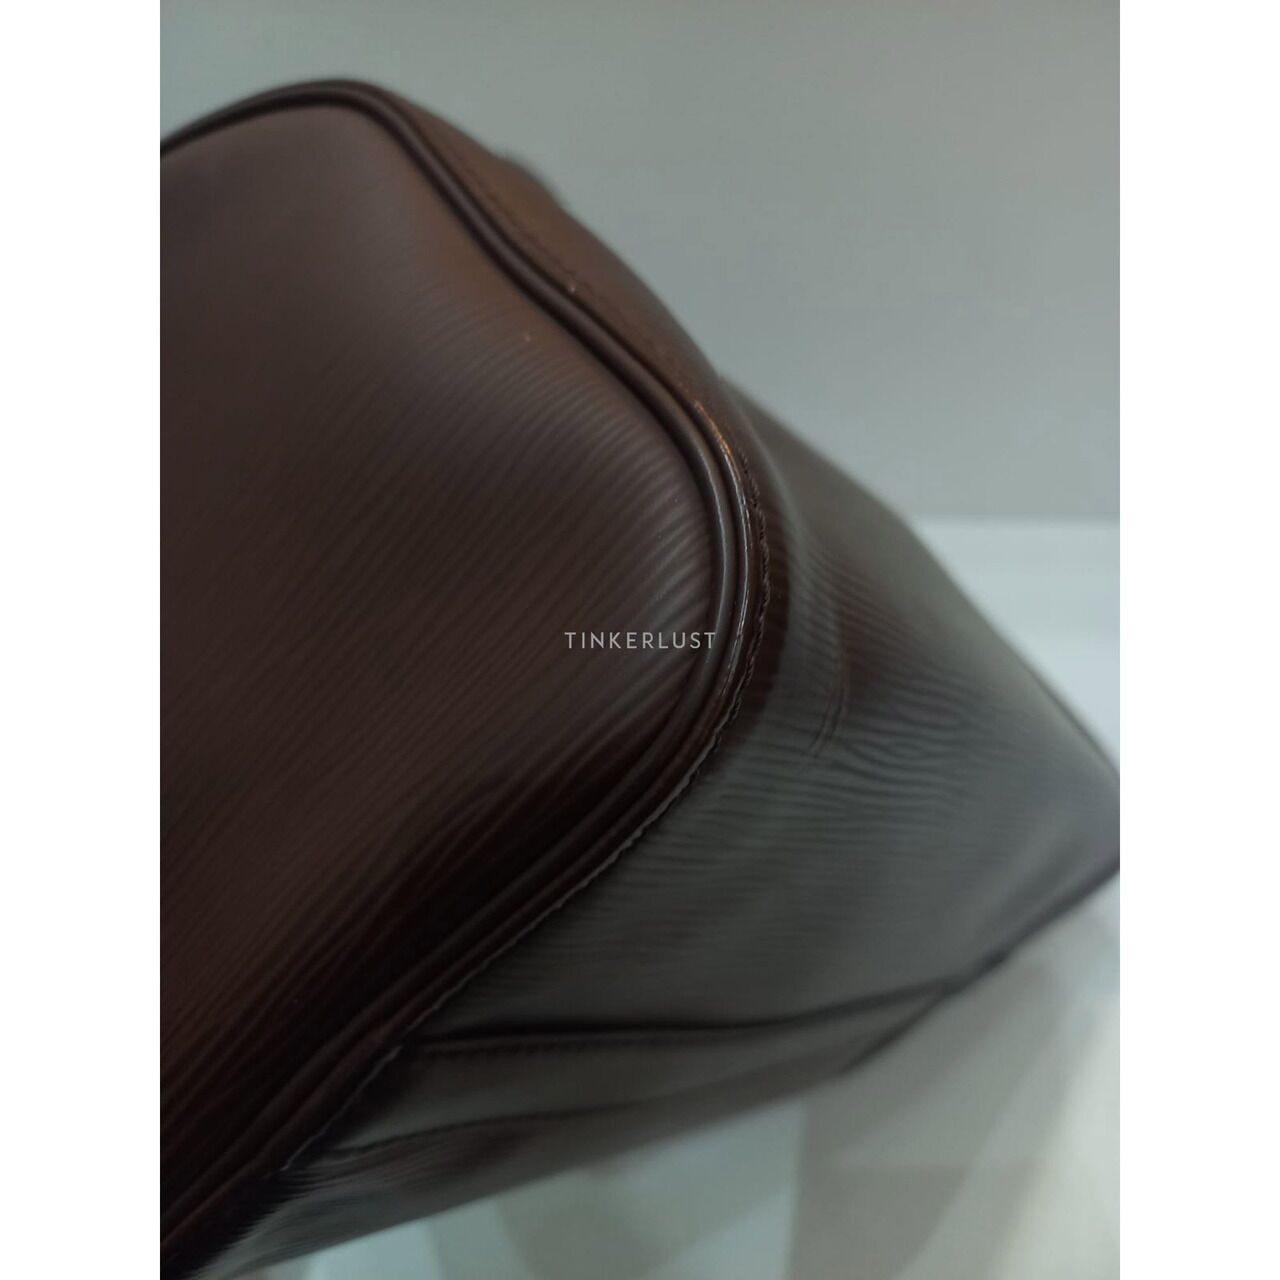 Louis Vuitton Speedy 25 Epi Leather Brown 2004 Handbag